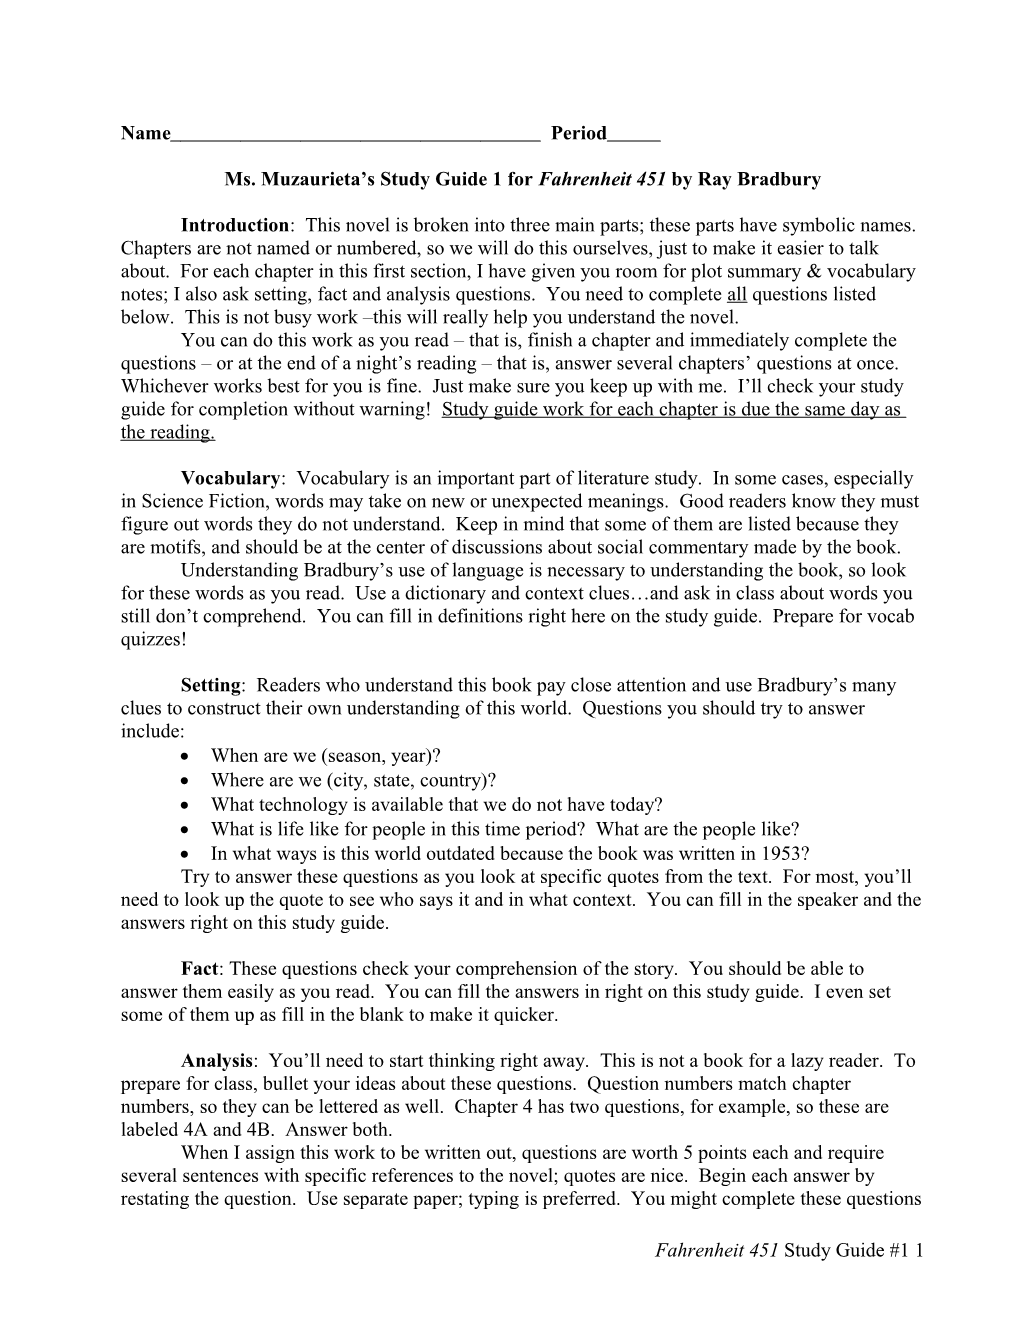 Ms. Muzaurieta S Study Guide 1 for Fahrenheit 451 by Ray Bradbury